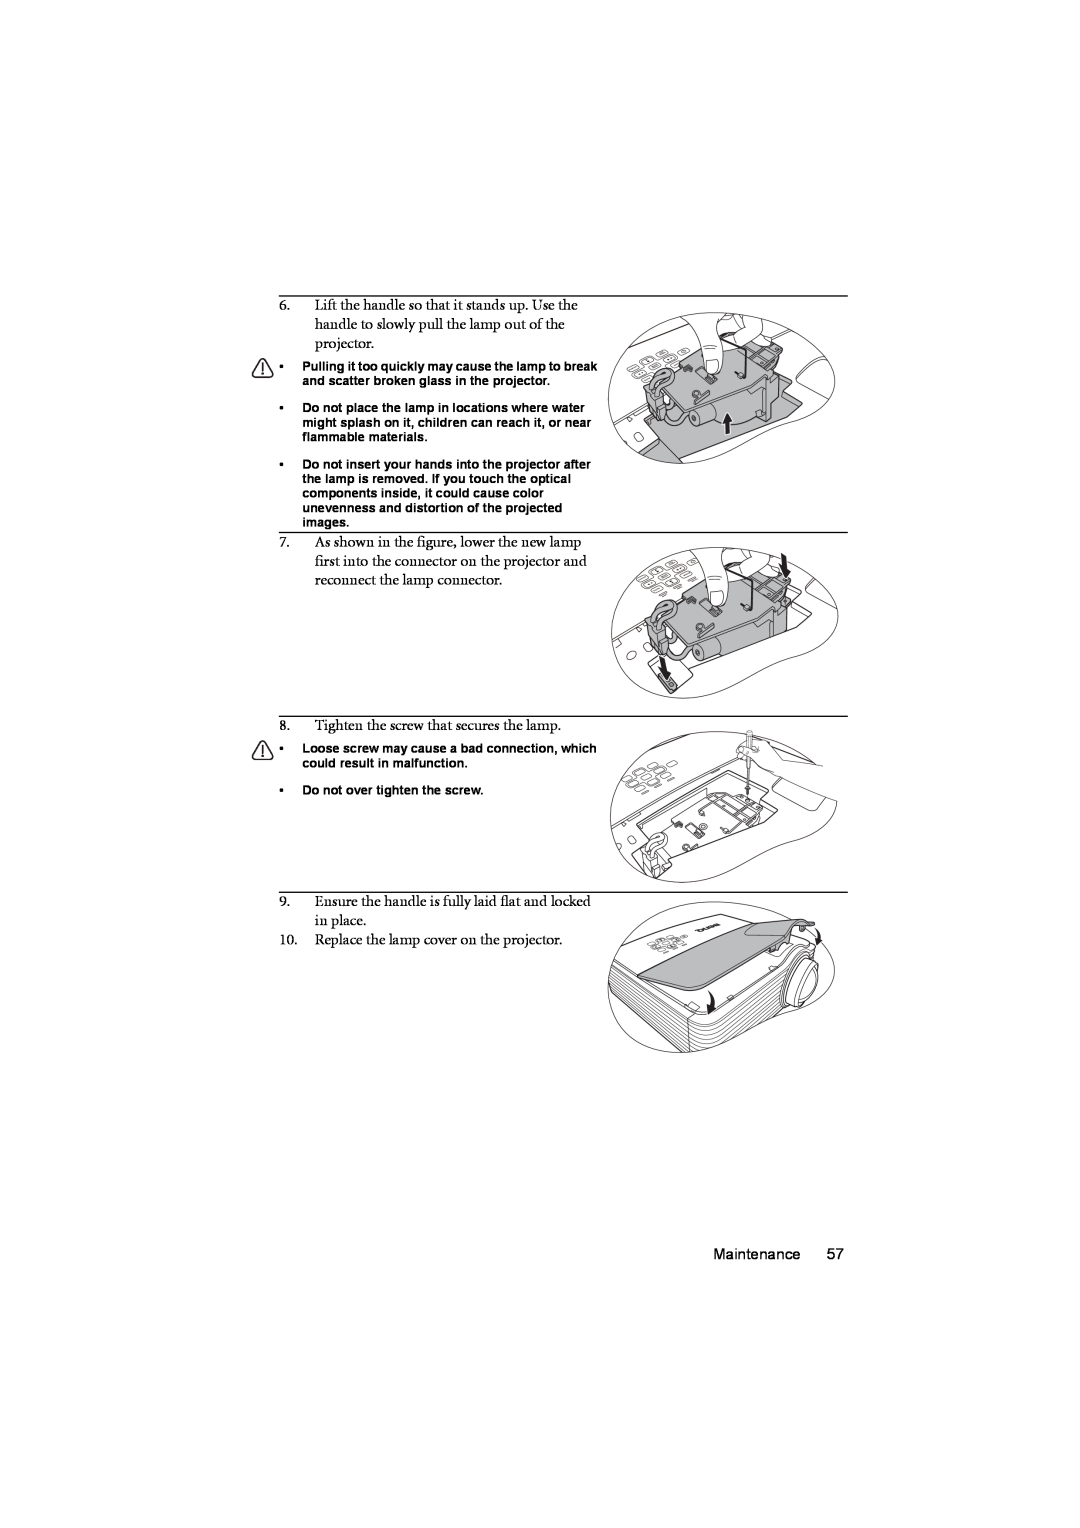 BenQ MP776 ST user manual Do not over tighten the screw 